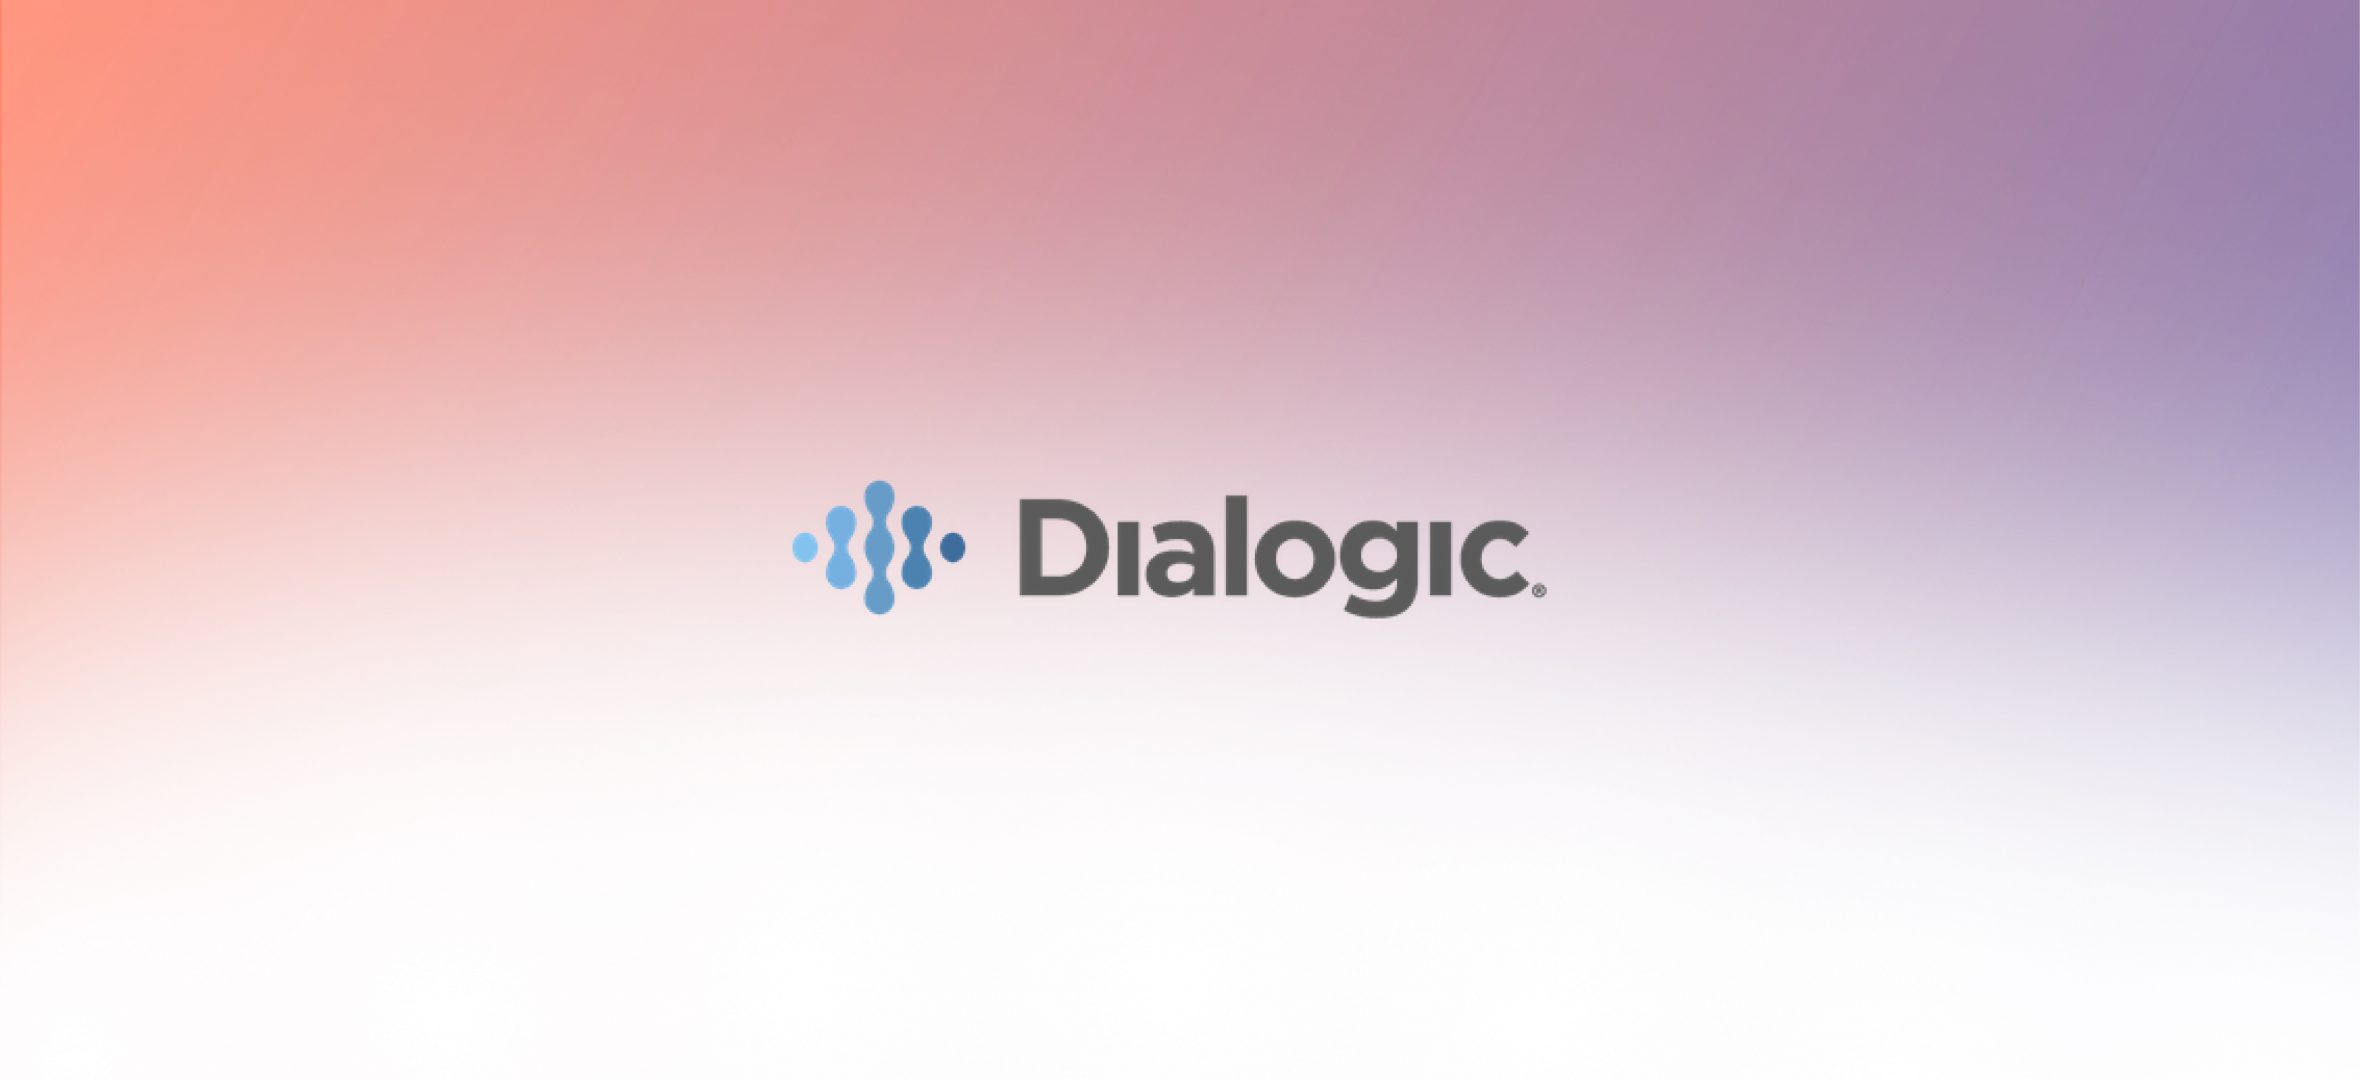 Dialogic and Epsilon Collaborate to Launch a Global, Carrier-Class Dialogic BUZZ™ UCaaS Platform